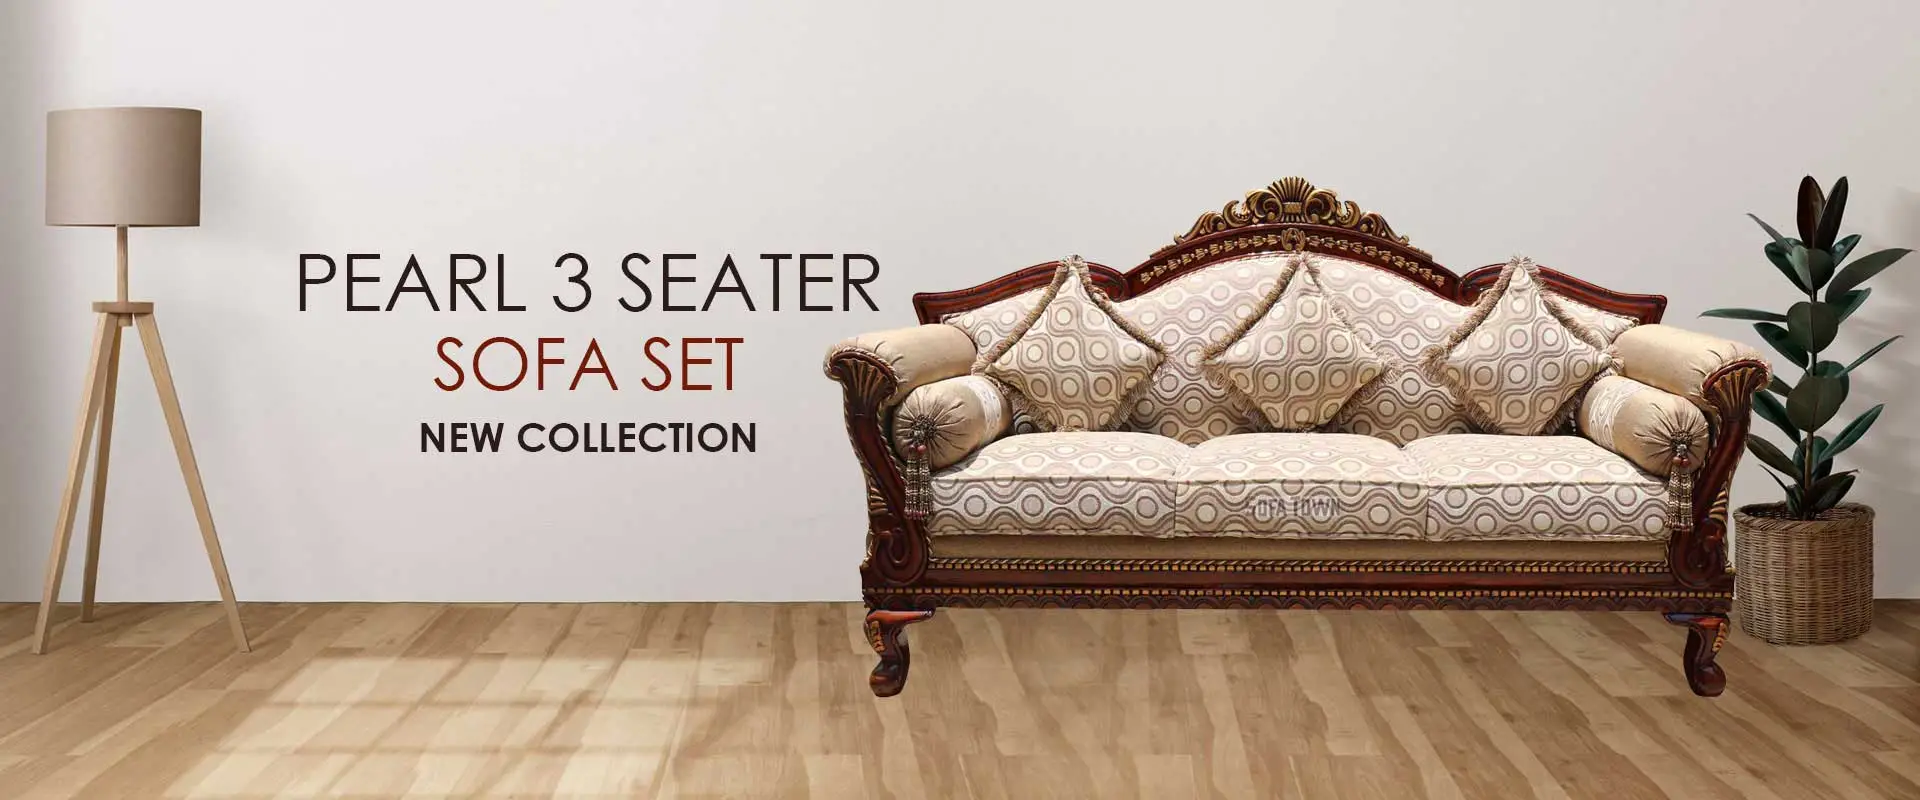 Pearl 3 Seater Sofa Set  Manufacturers in Dewas